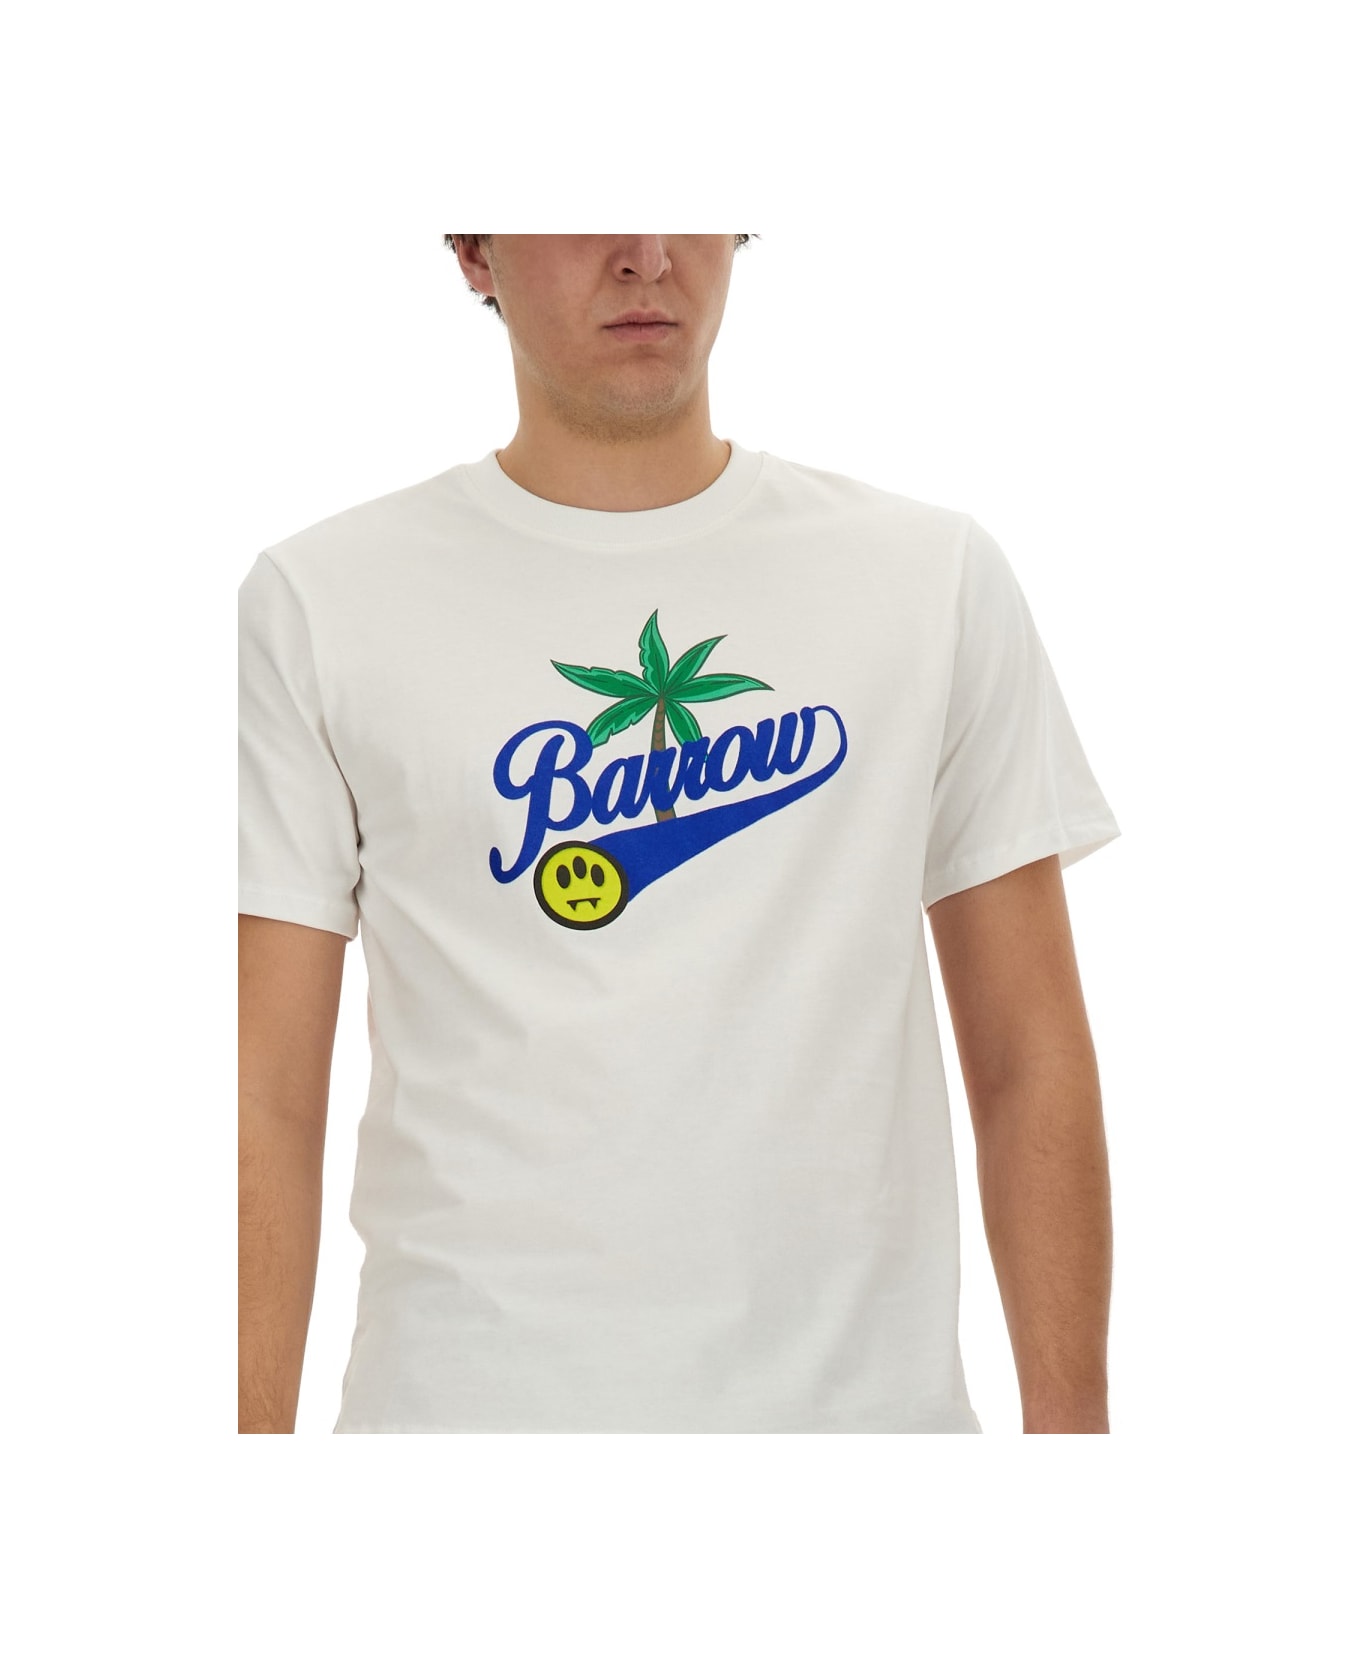 Barrow T-shirt With Logo - WHITE Tシャツ